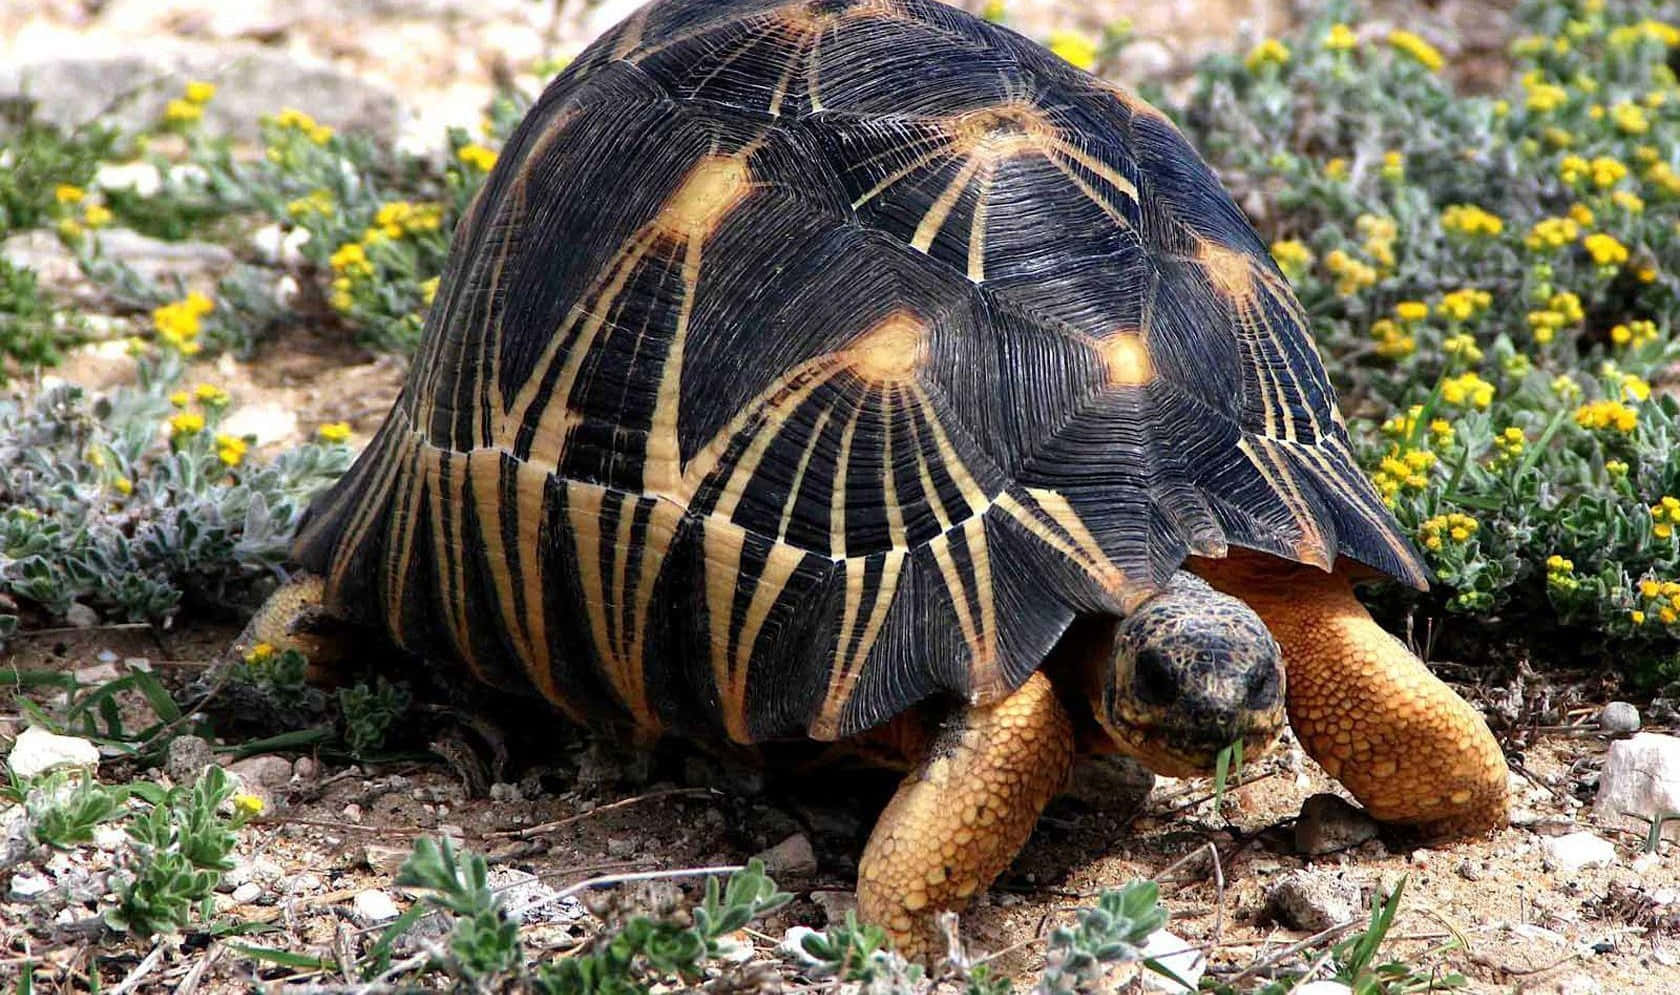 Majestic Tortoise Basking in the Sun